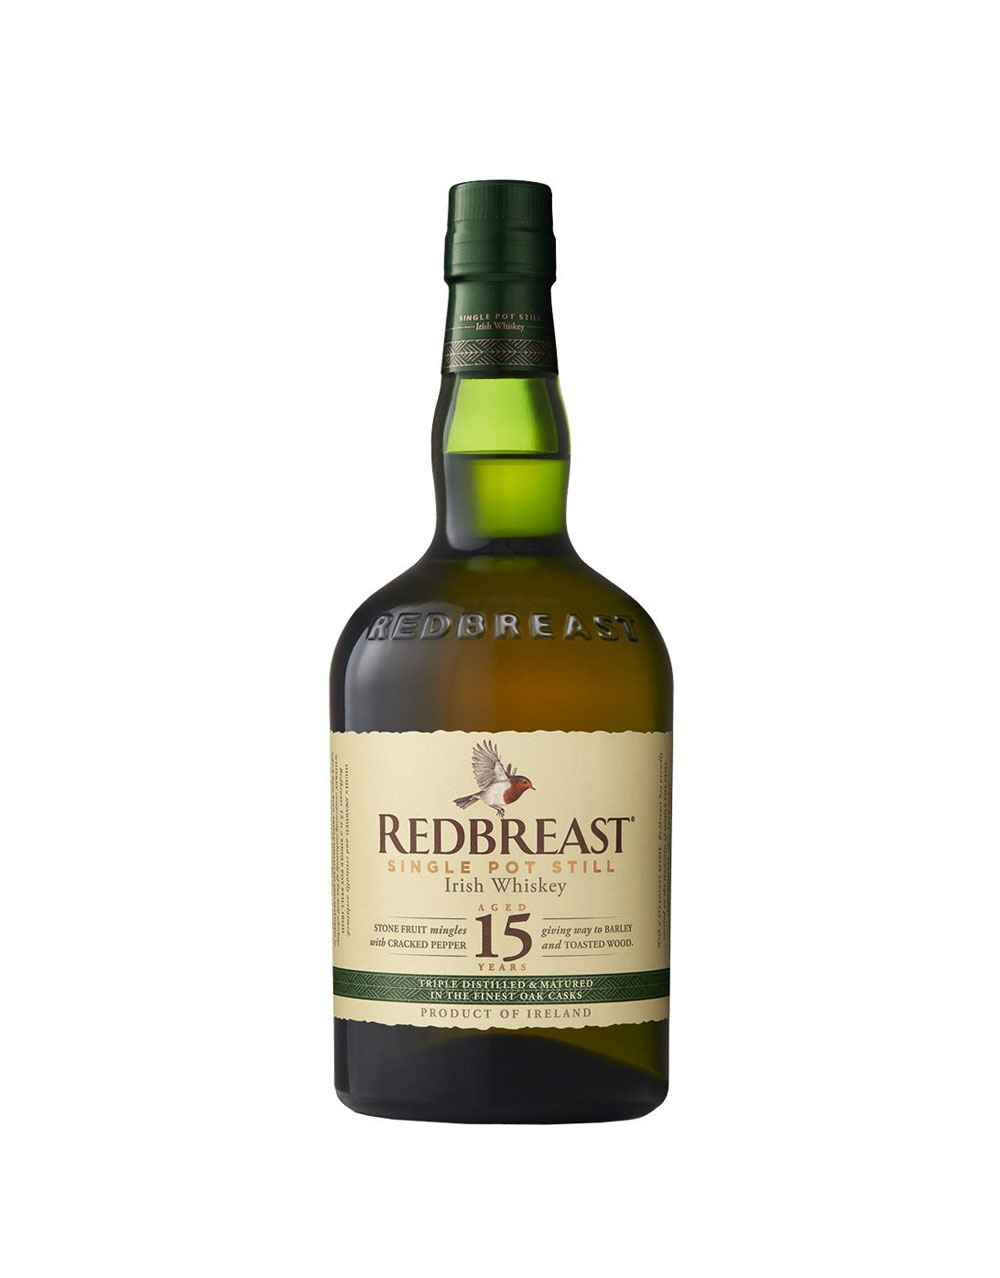 Cadenhead 29 Year Old Coal Ila Single Malt Scotch Whisky